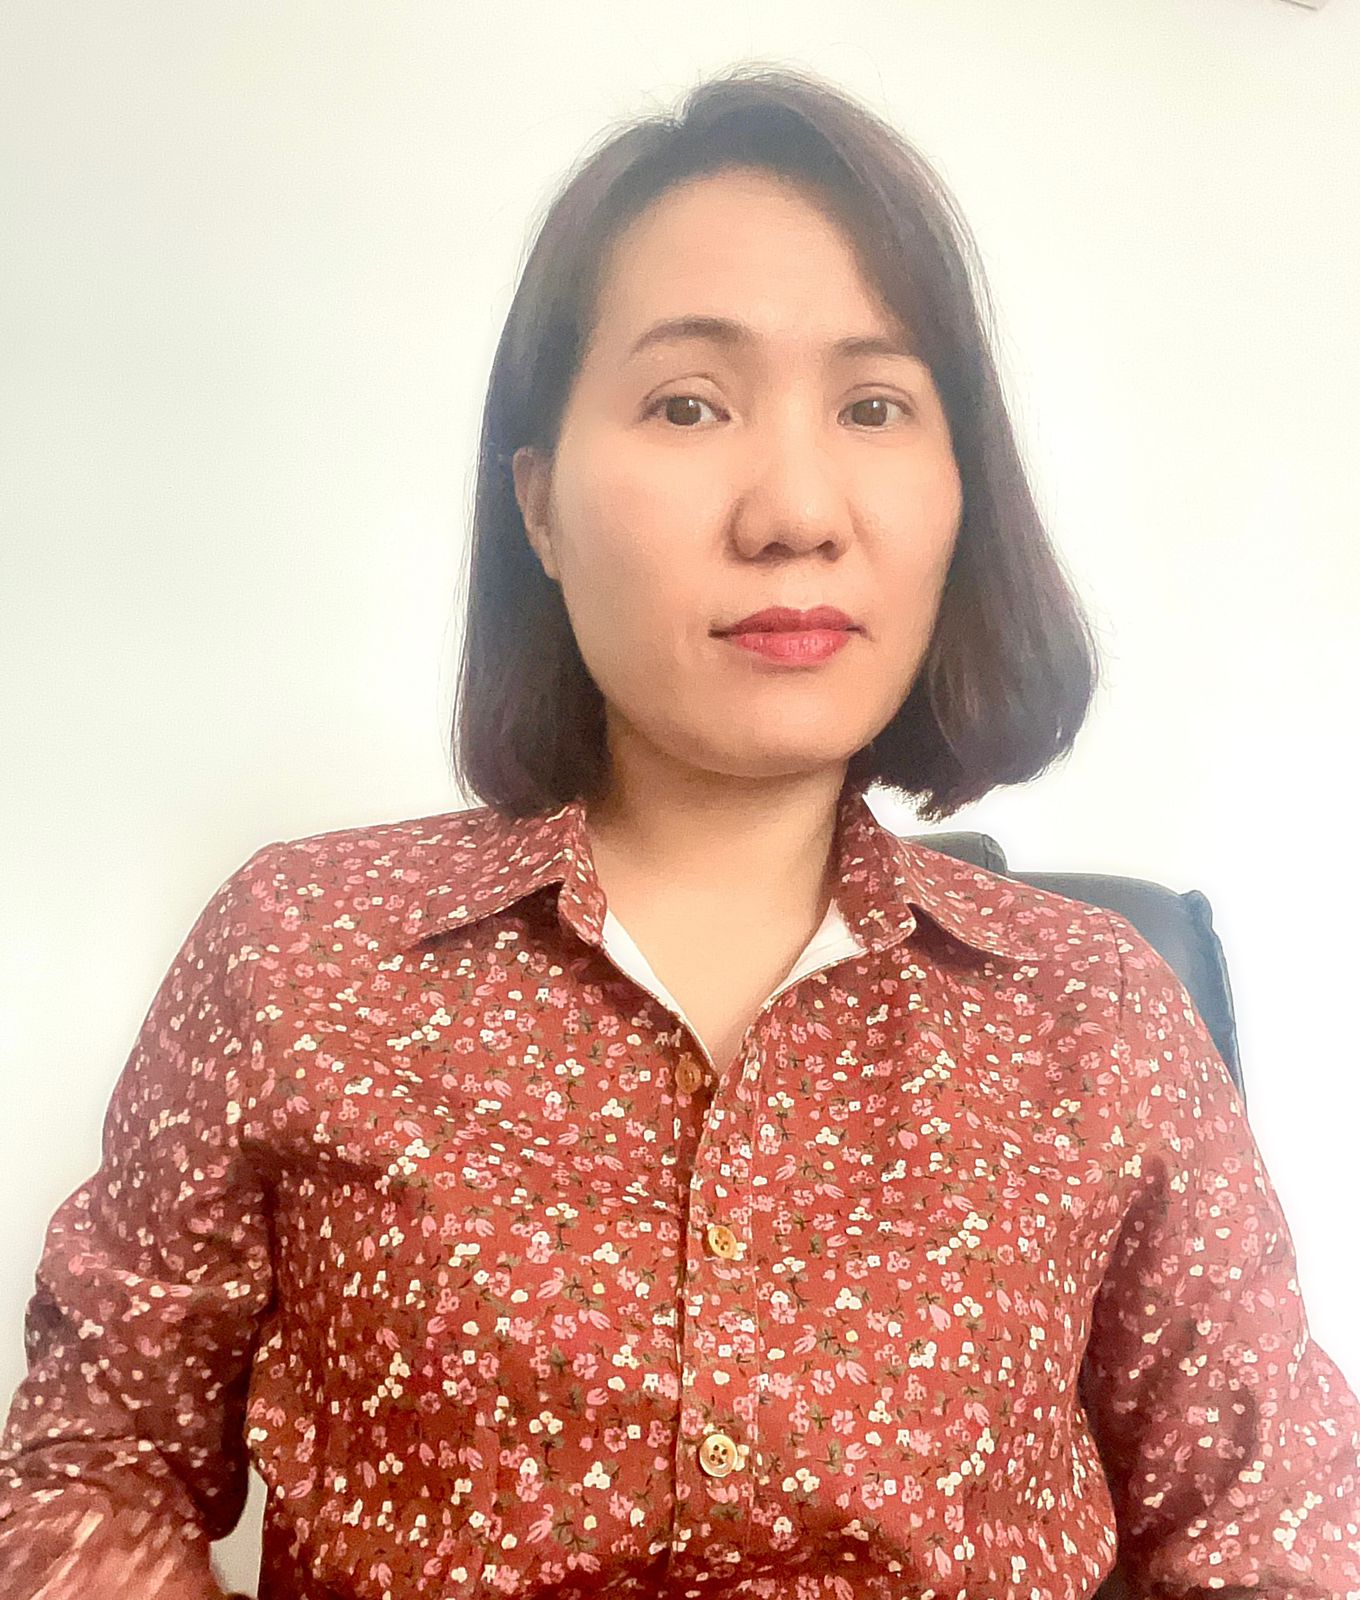 Ms. Susan Nguyen